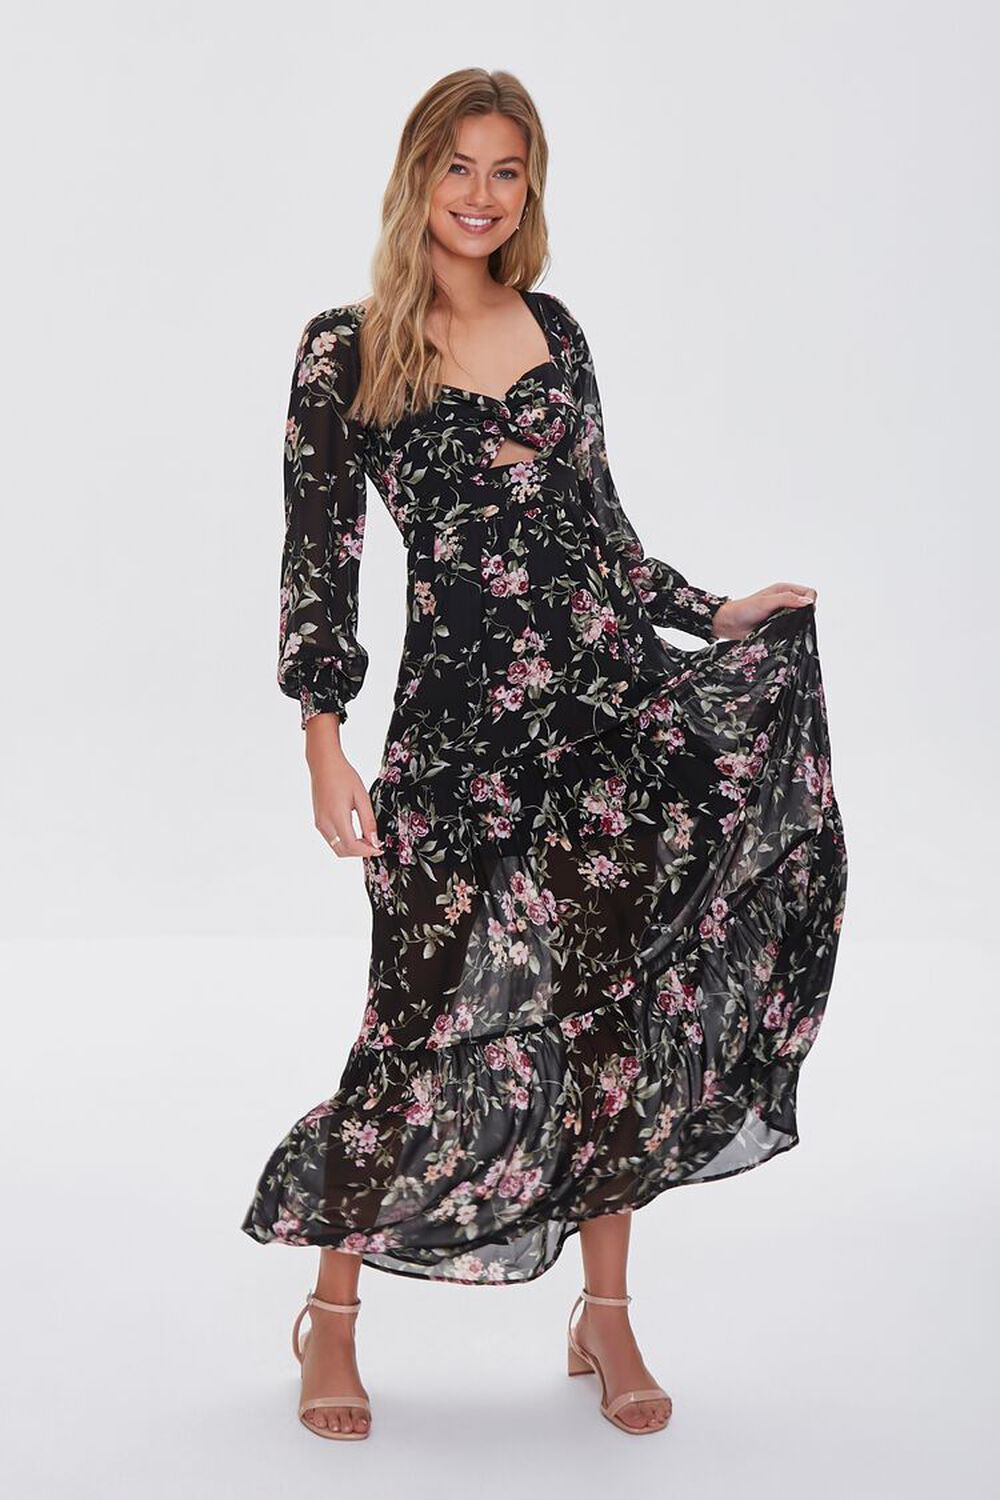 BLACK/MULTI Floral Print Maxi Dress, image 1